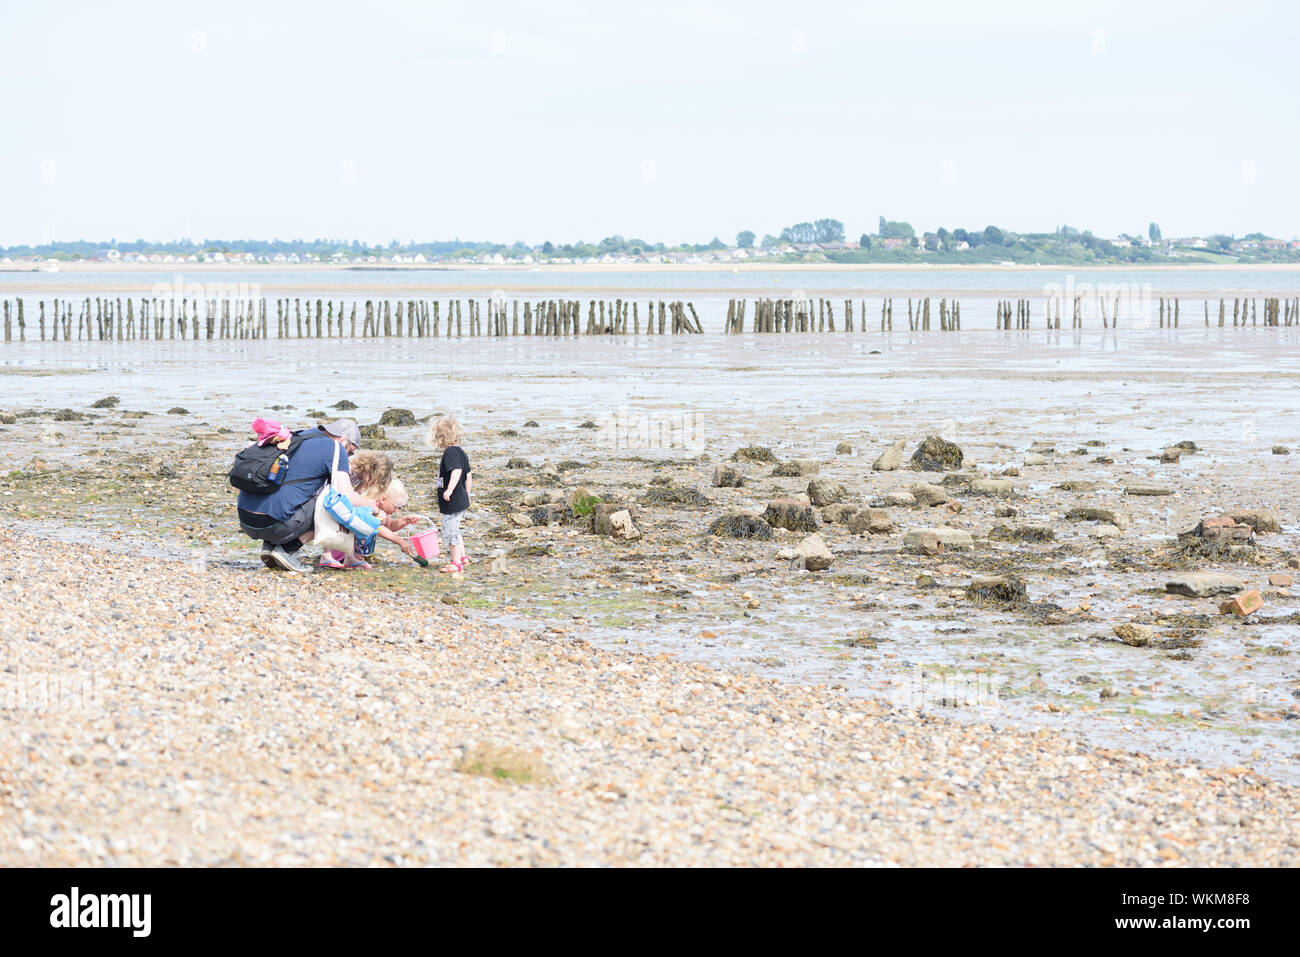 CUDMORE GROVE, ESSEX/ENGLAND - 1ST JUNE 2019 - People enjoying the seaside coast North Sea of Cudmore Grove on Mersea Island in Essex in the Summertim Stock Photo